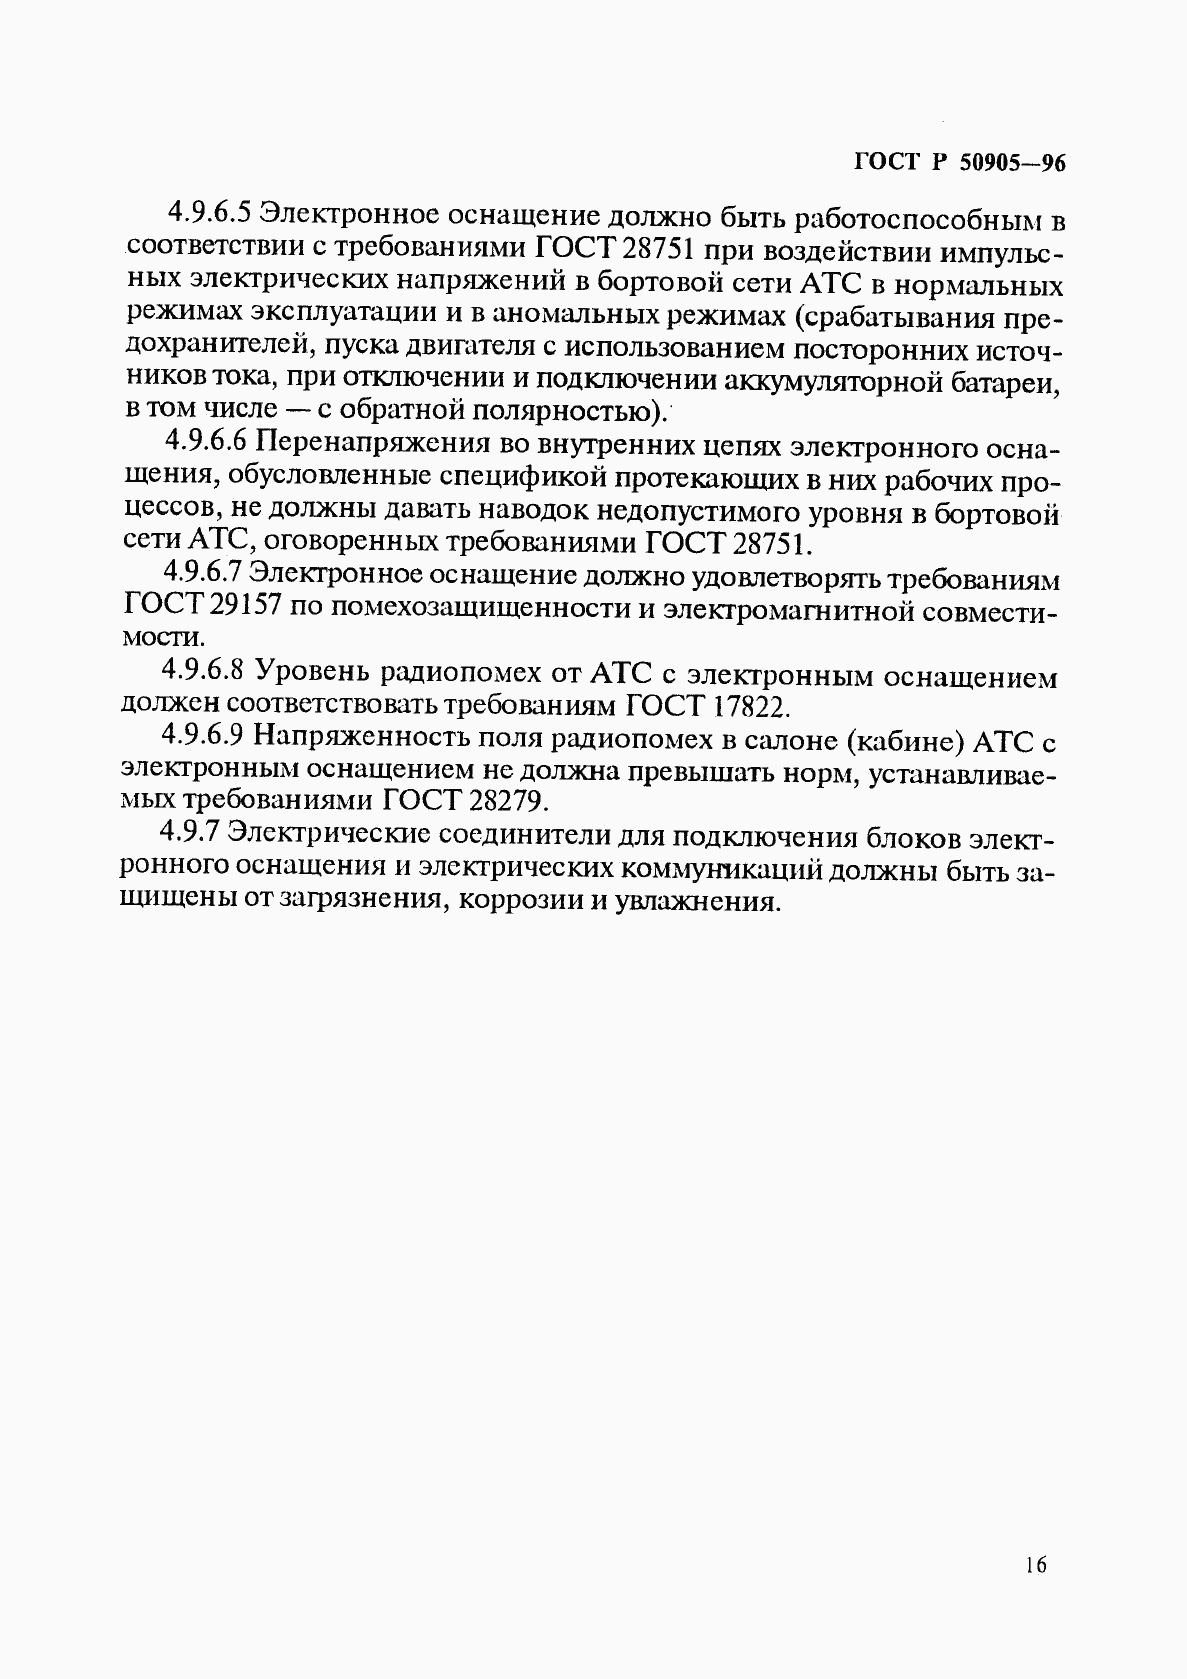 ГОСТ Р 50905-96, страница 19